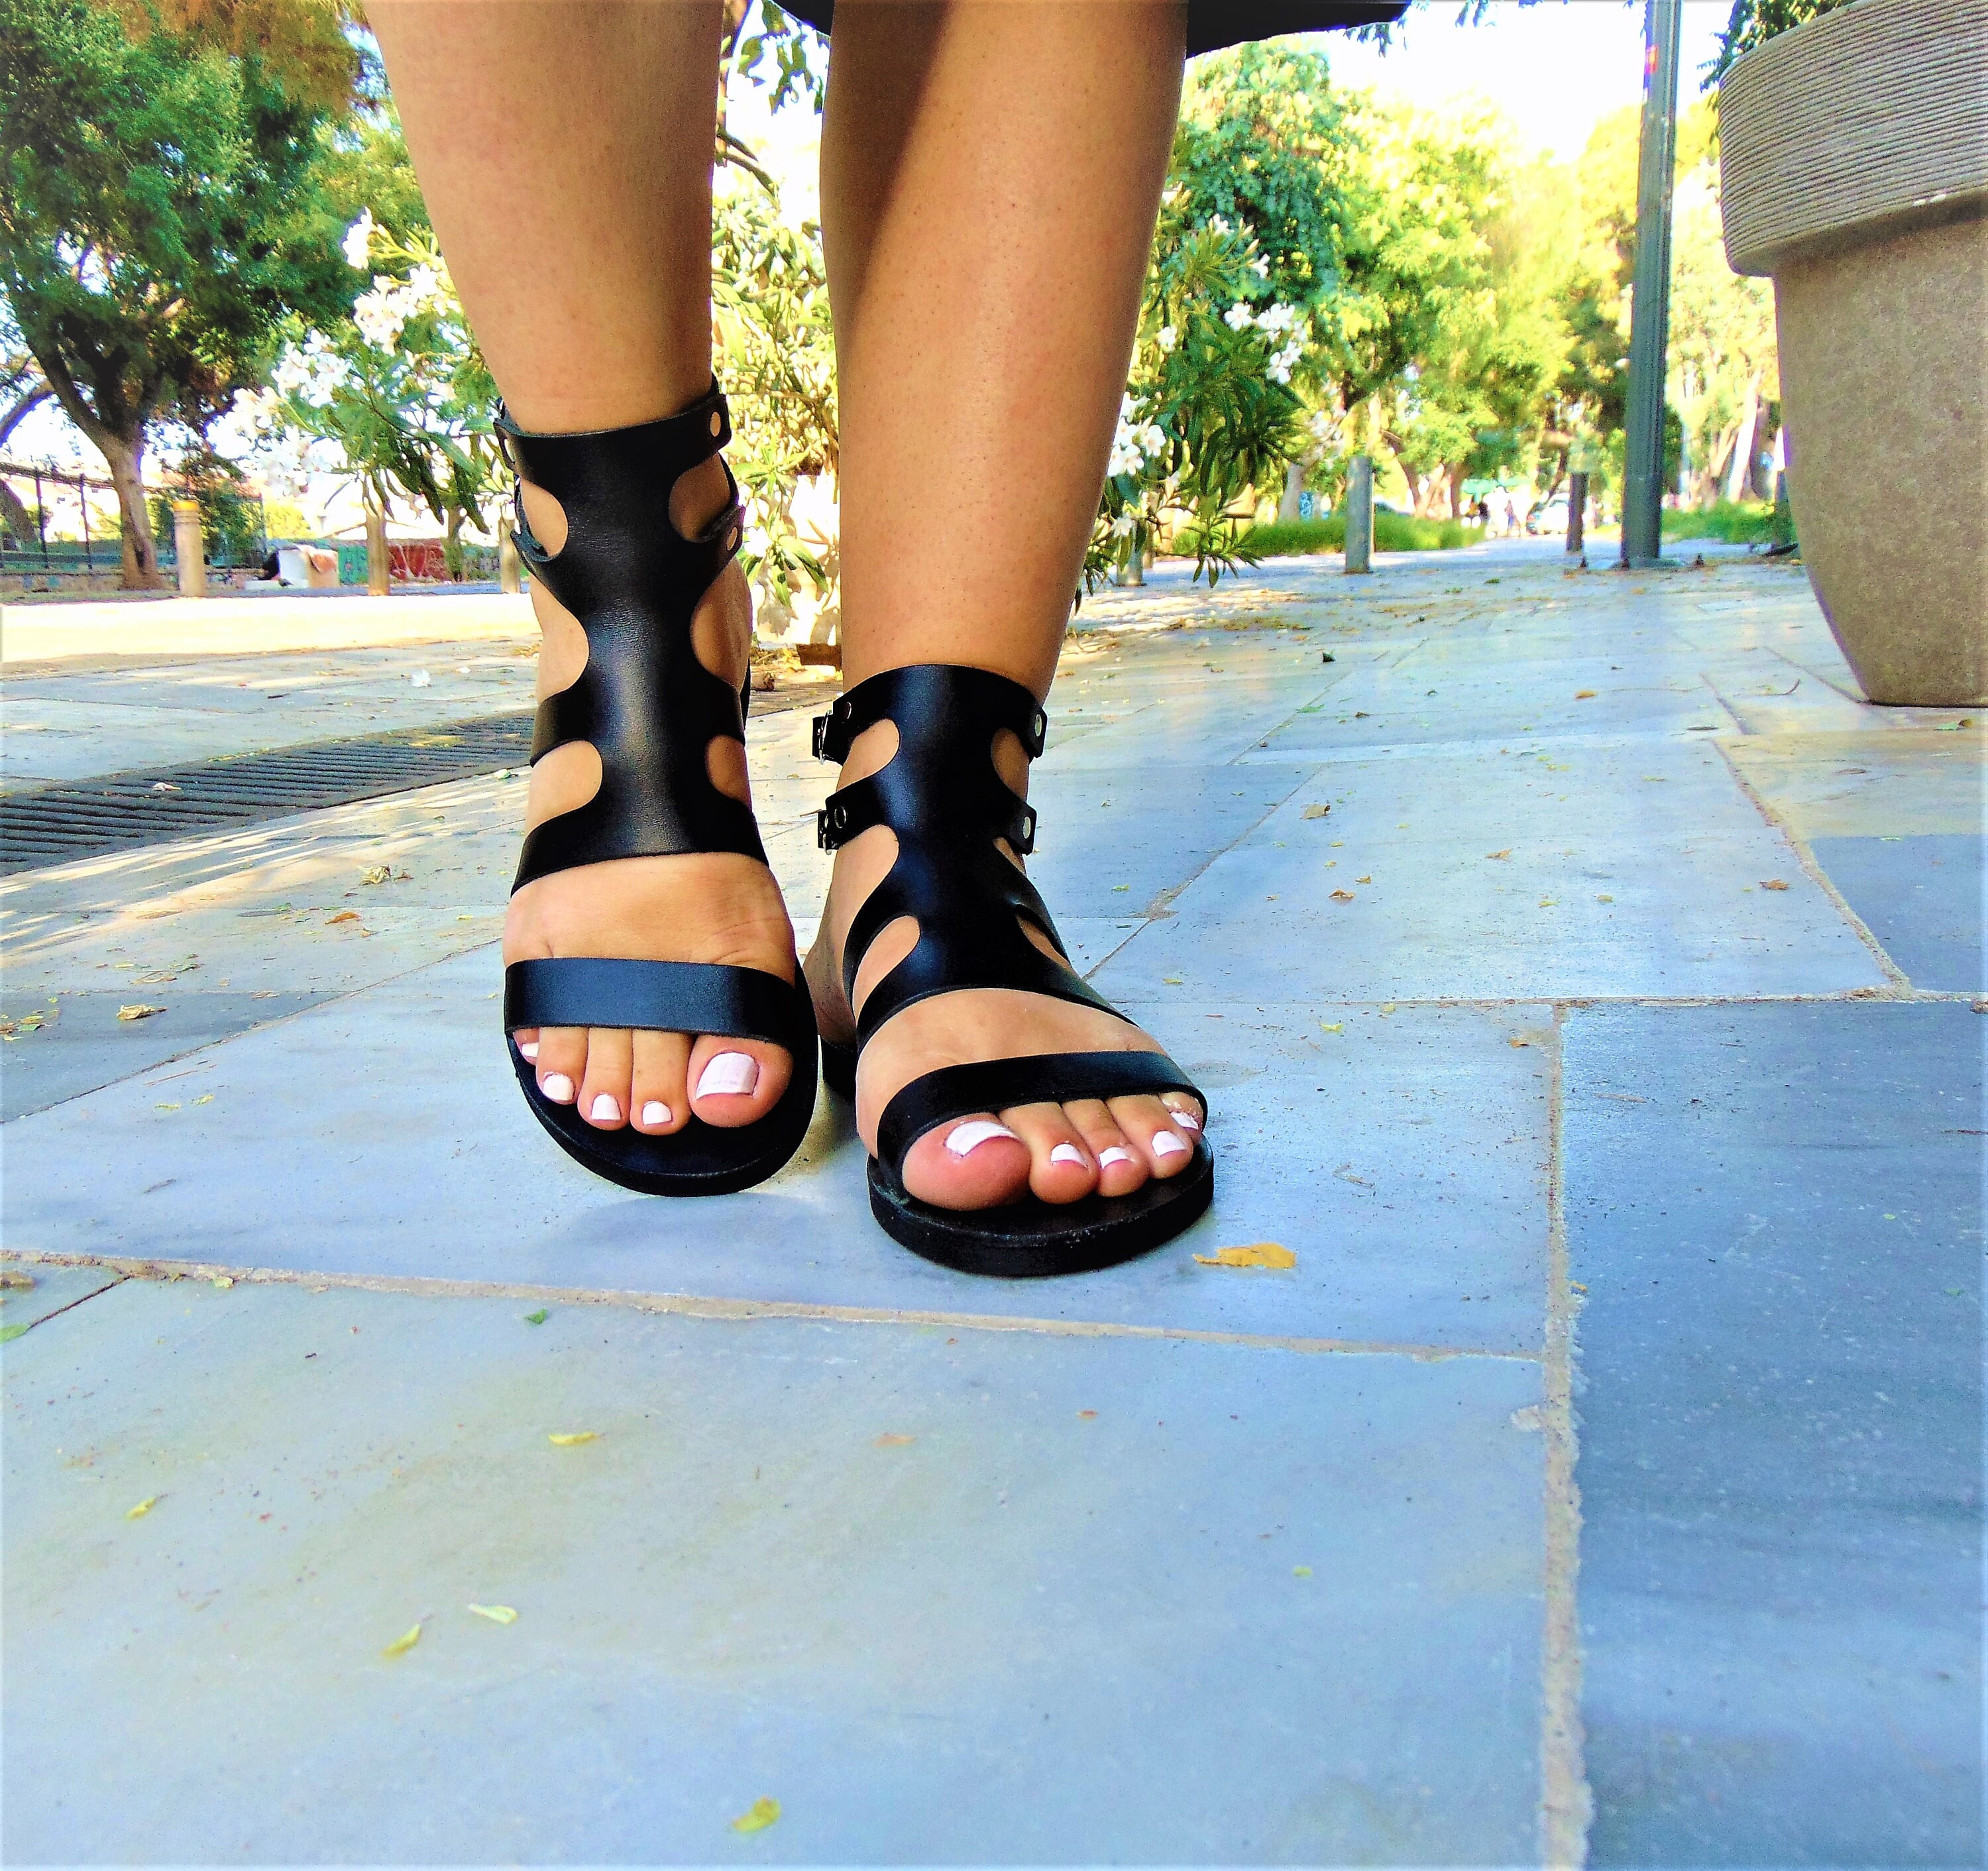 Black Farniento leather sandals